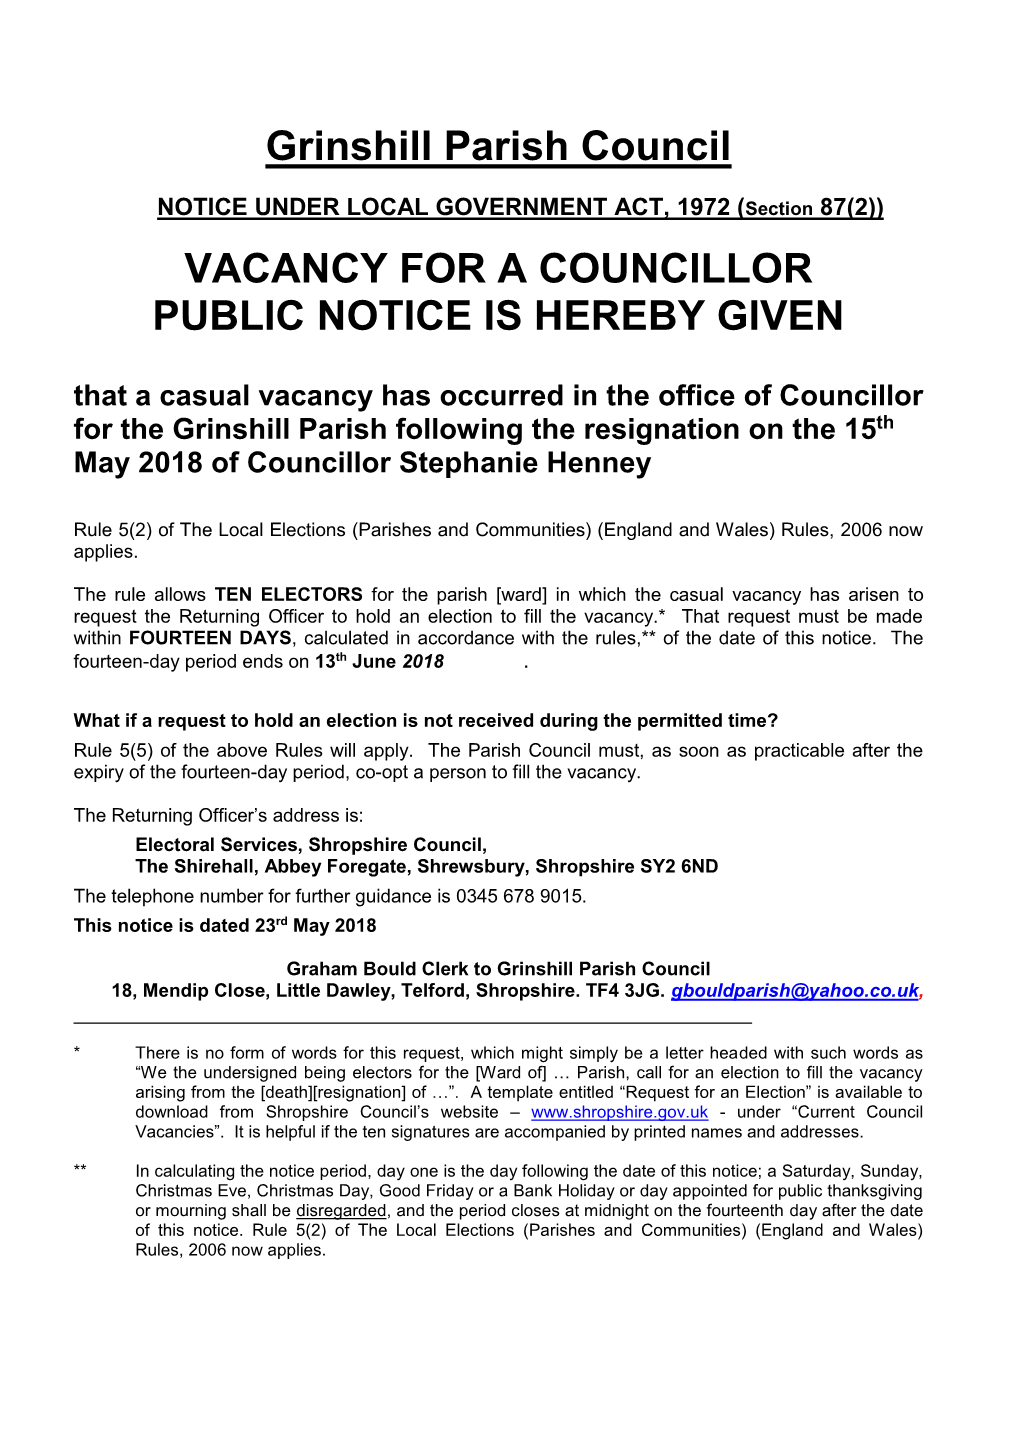 Grinshill Parish Council VACANCY for a COUNCILLOR PUBLIC